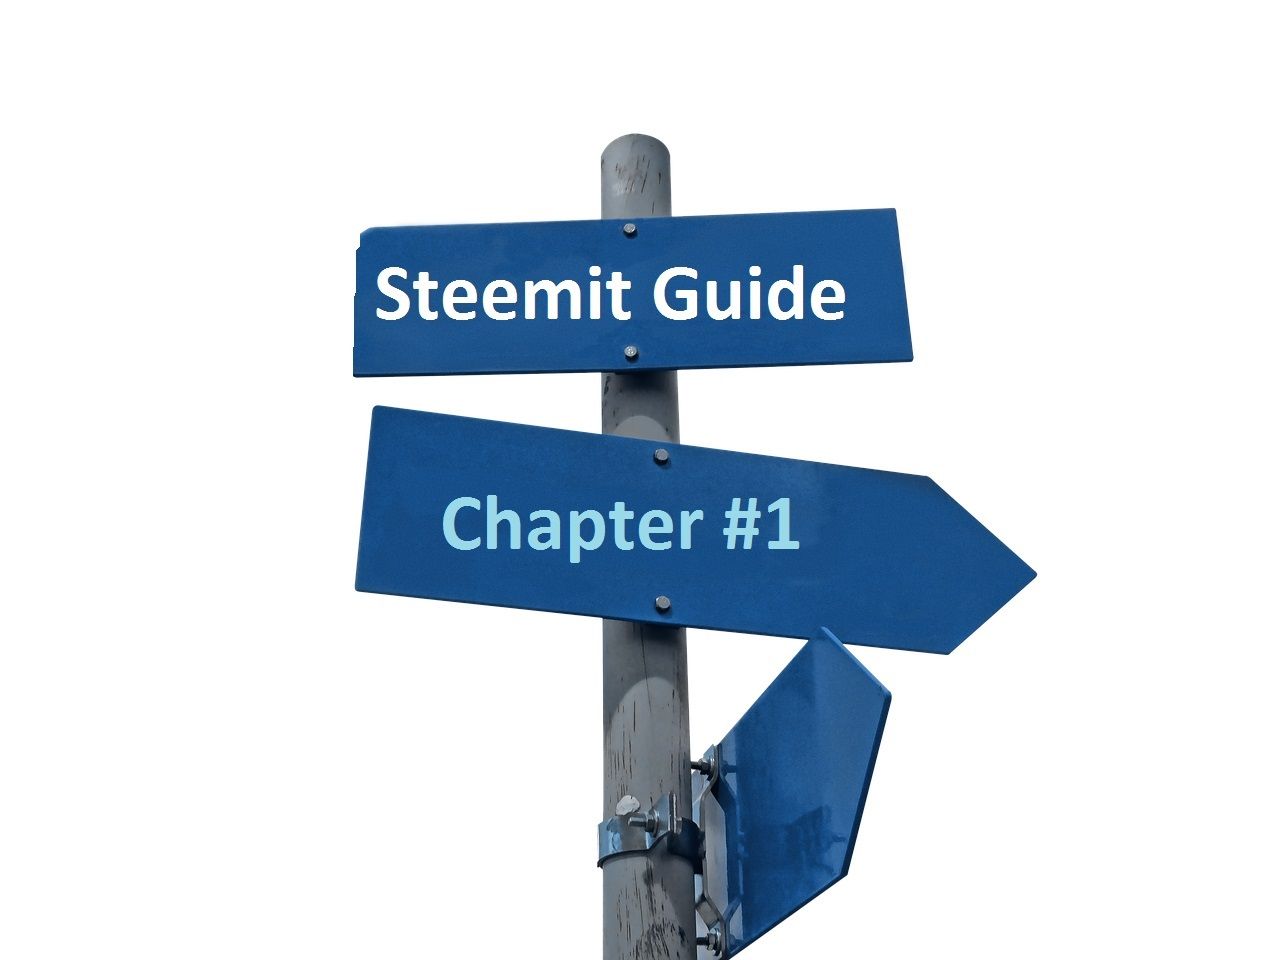 Steemit Guide Chapters - Steem Blockchain - Chapter 1.jpg